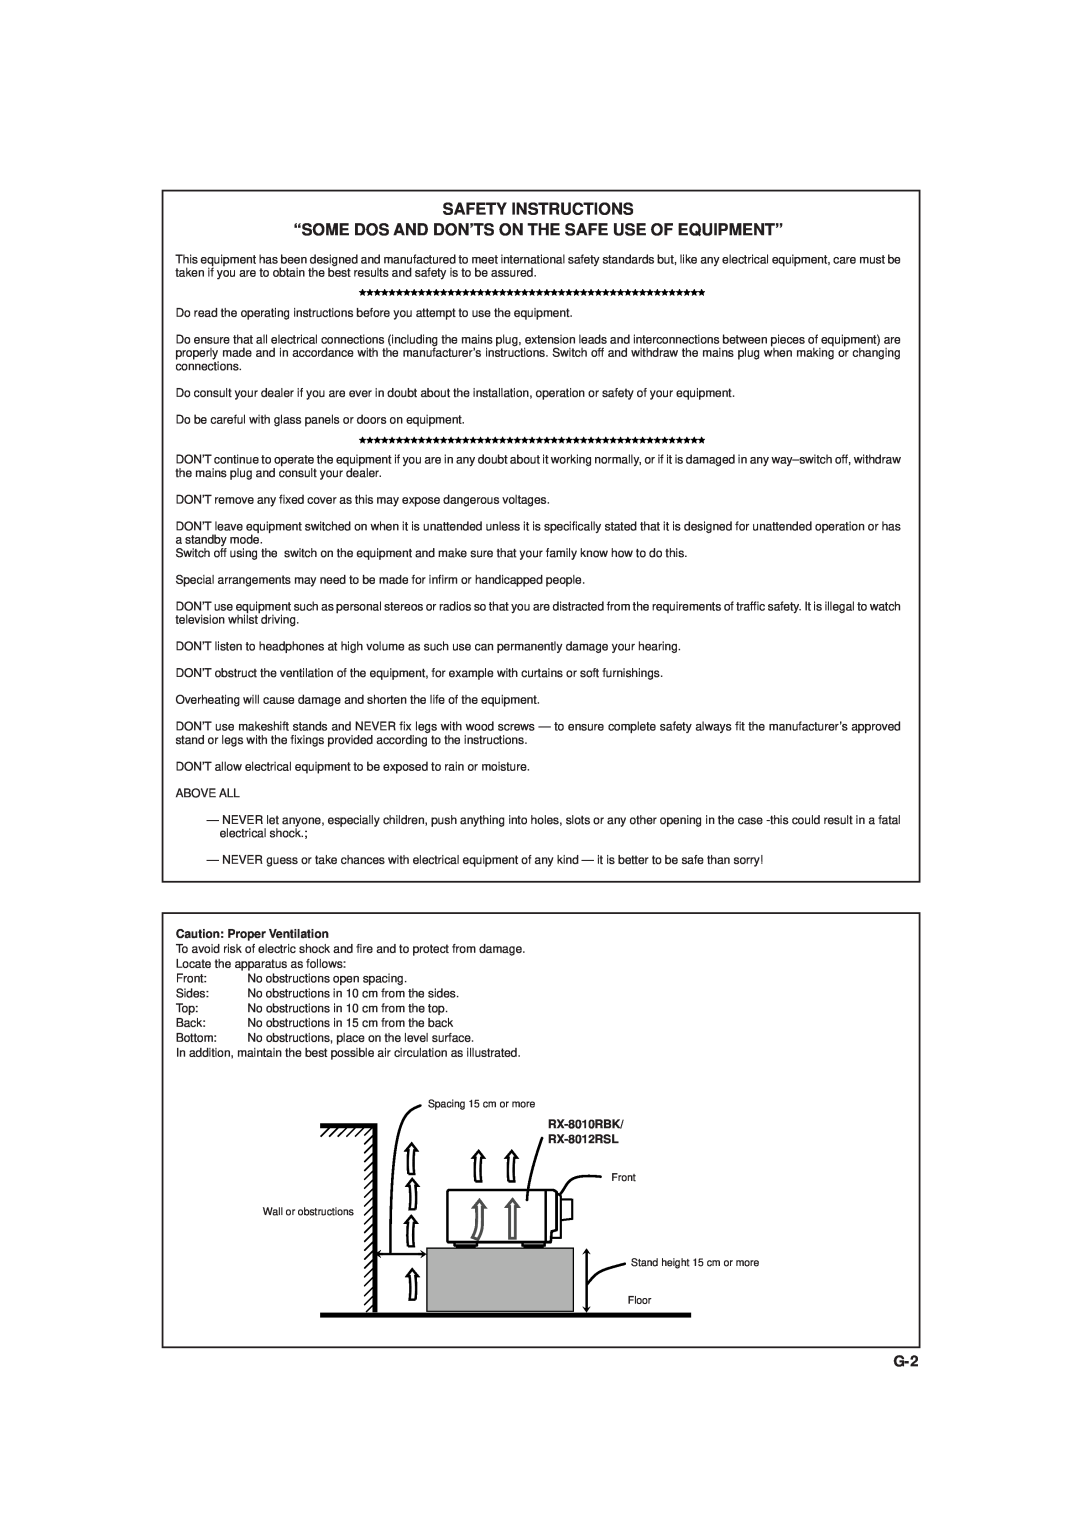 JVC manual Safety Instructions, Caution Proper Ventilation, RX-8010RBK RX-8012RSL 